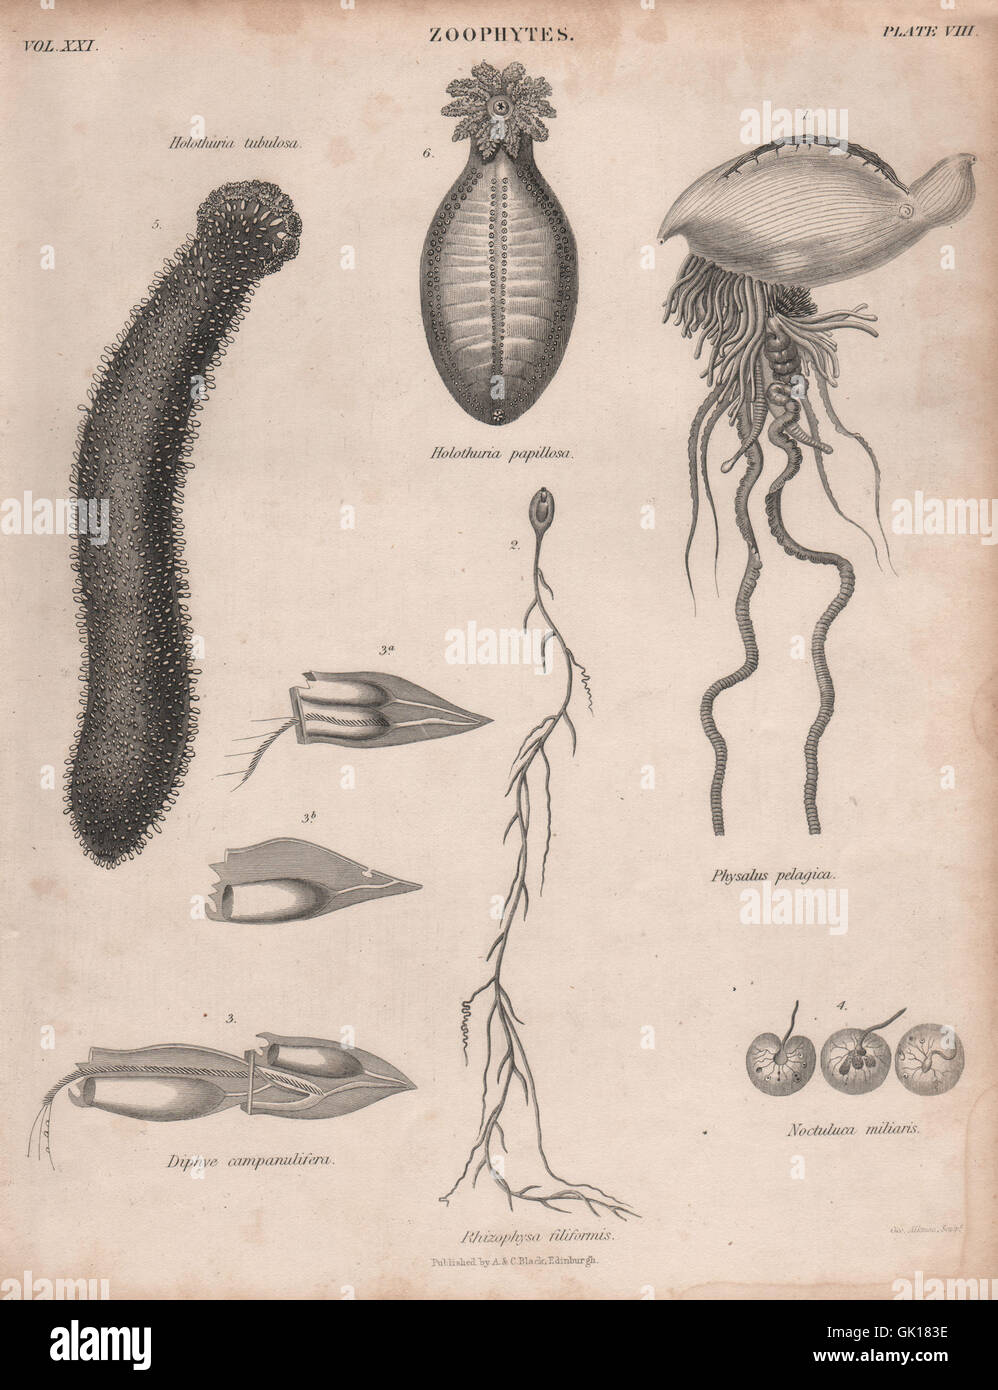 Zoophytes. Physalus pelagica. Rhizophysa filiformis. Diphye campanulifera, 1860 Stock Photo